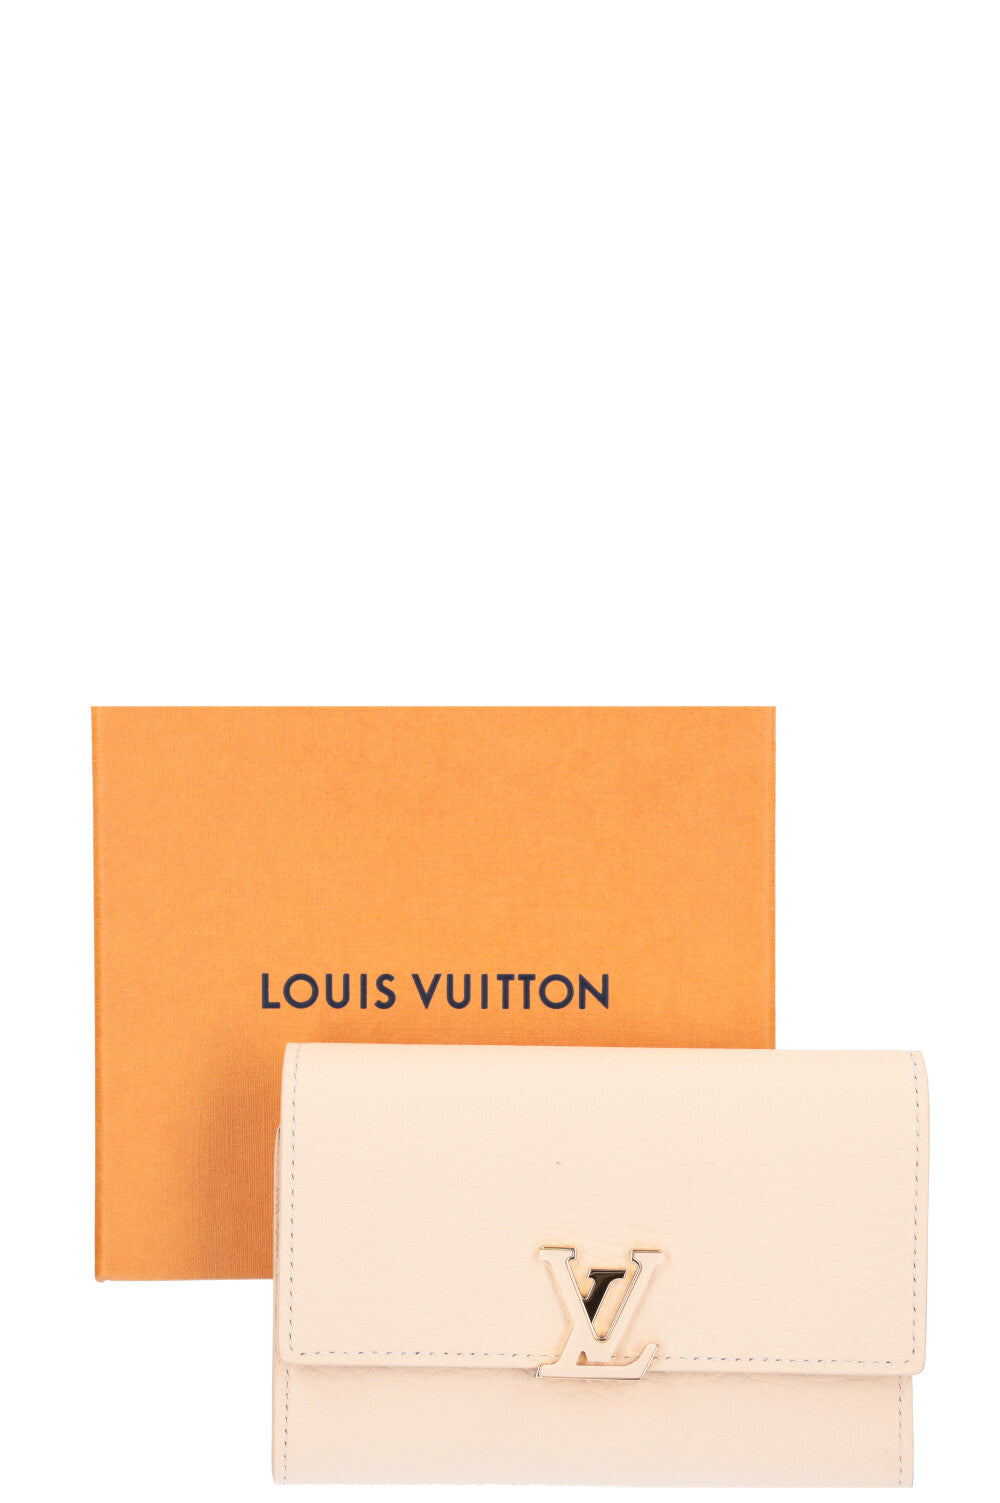 Nước hoa Louis Vuitton Attrape-Rêves 100ml - Trải Nghiệm Kì Diệu